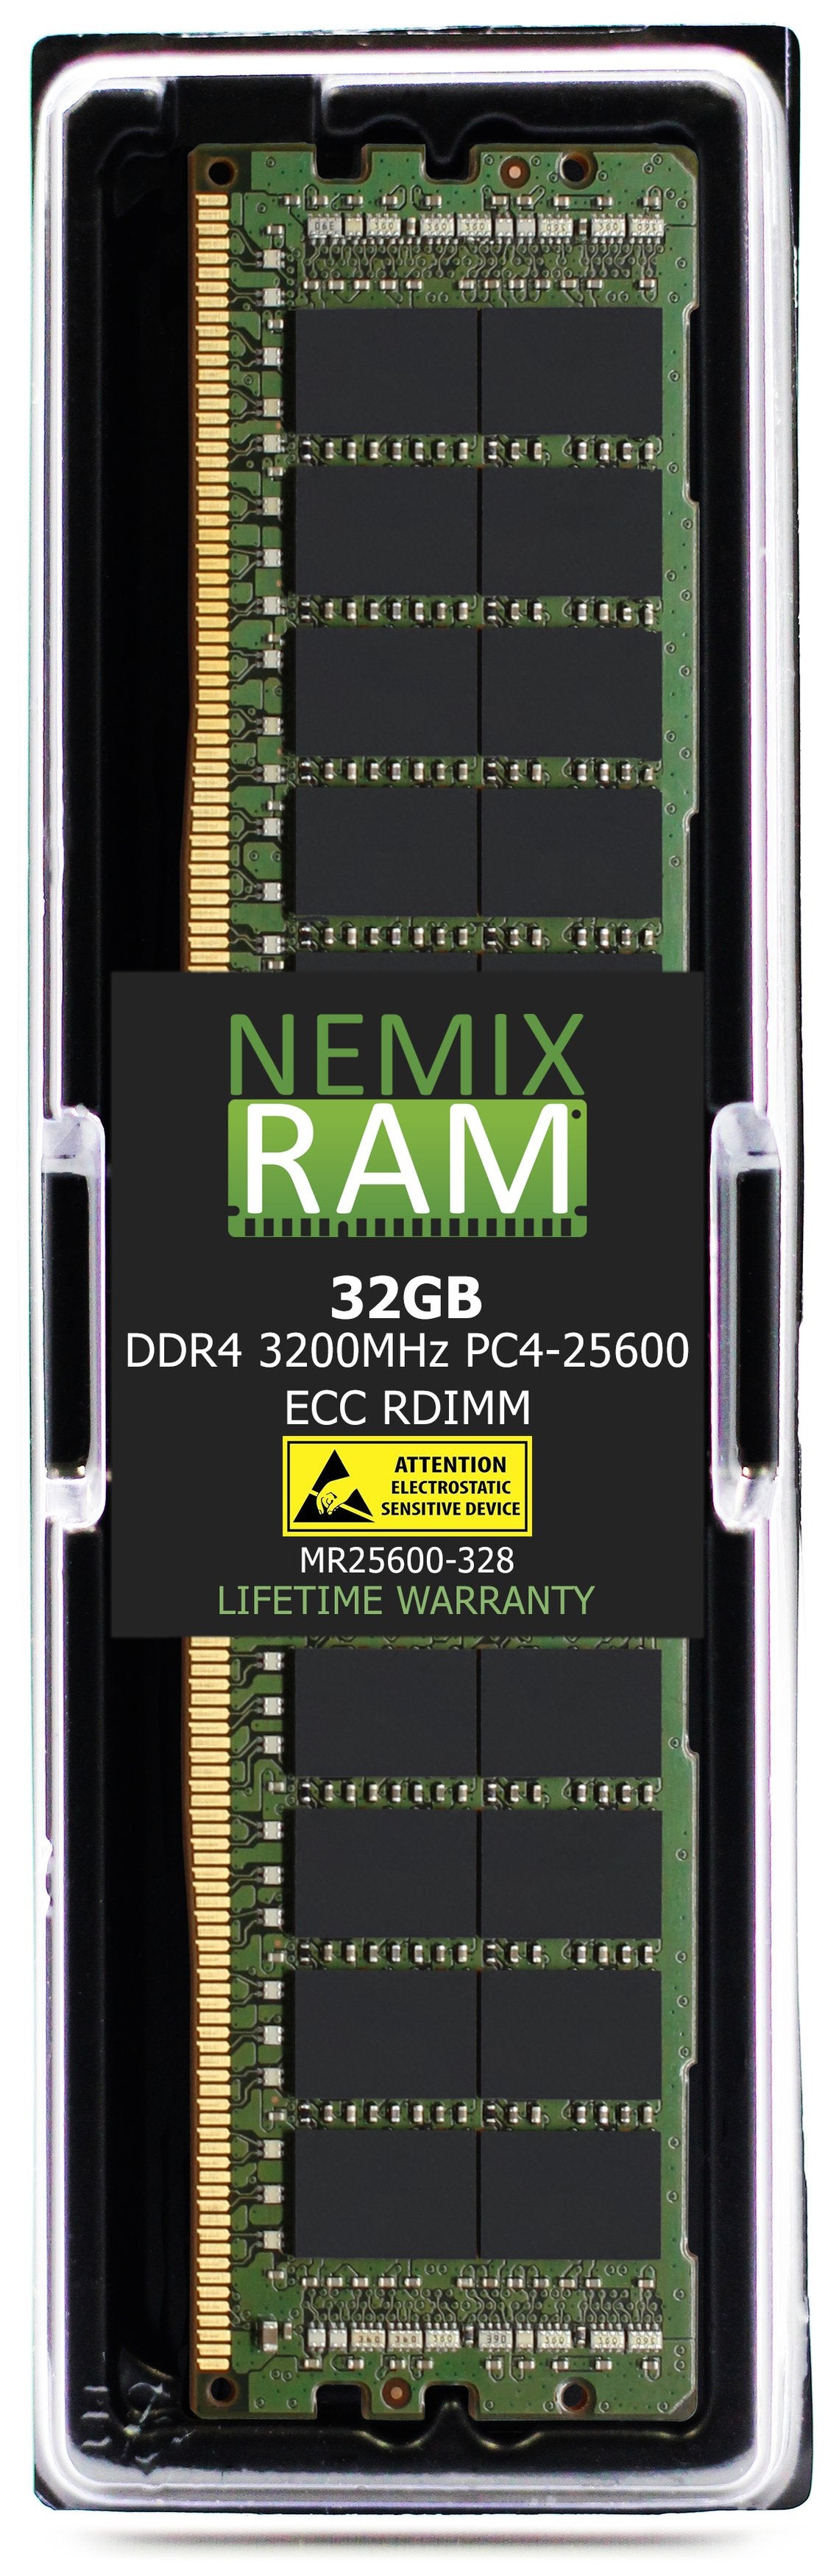 Hynix HMAA4GR7AJR8N-XN 32GB DDR4 3200MHZ PC4-25600 RDIMM Compatible Memory Module